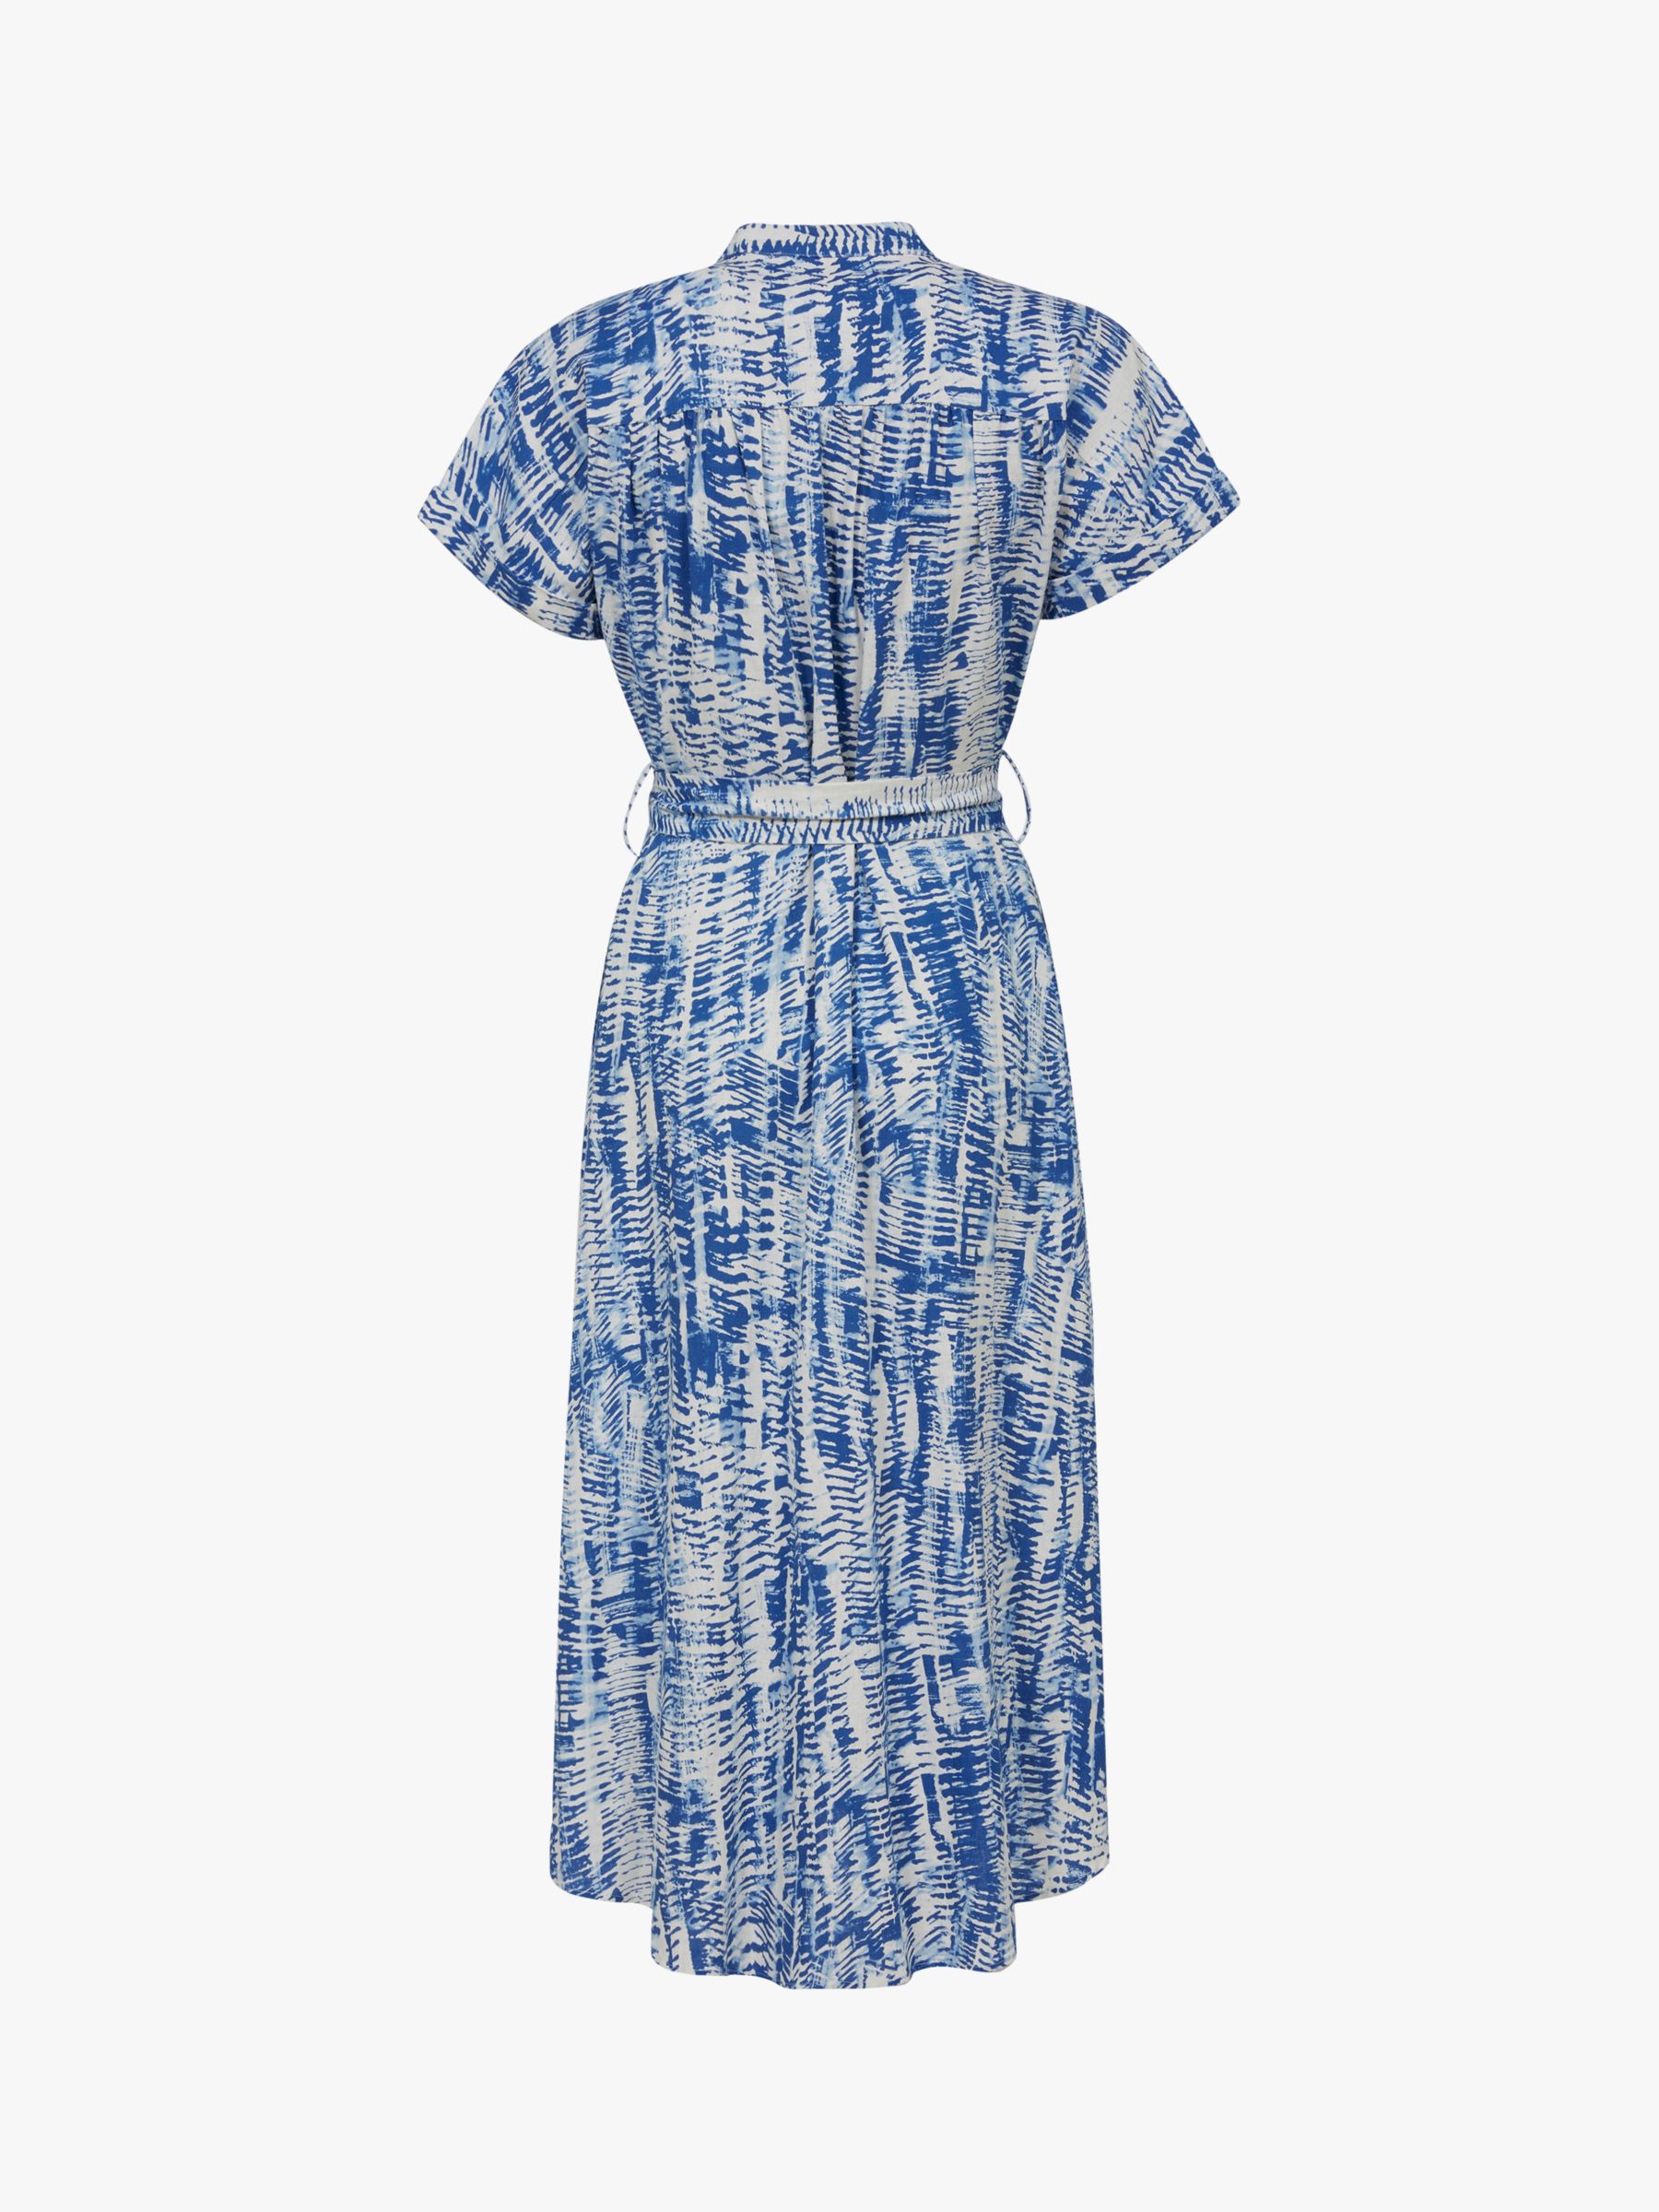 Celtic & Co. Chevron Print Linen Blend Shirt Dress, Indigo, 16